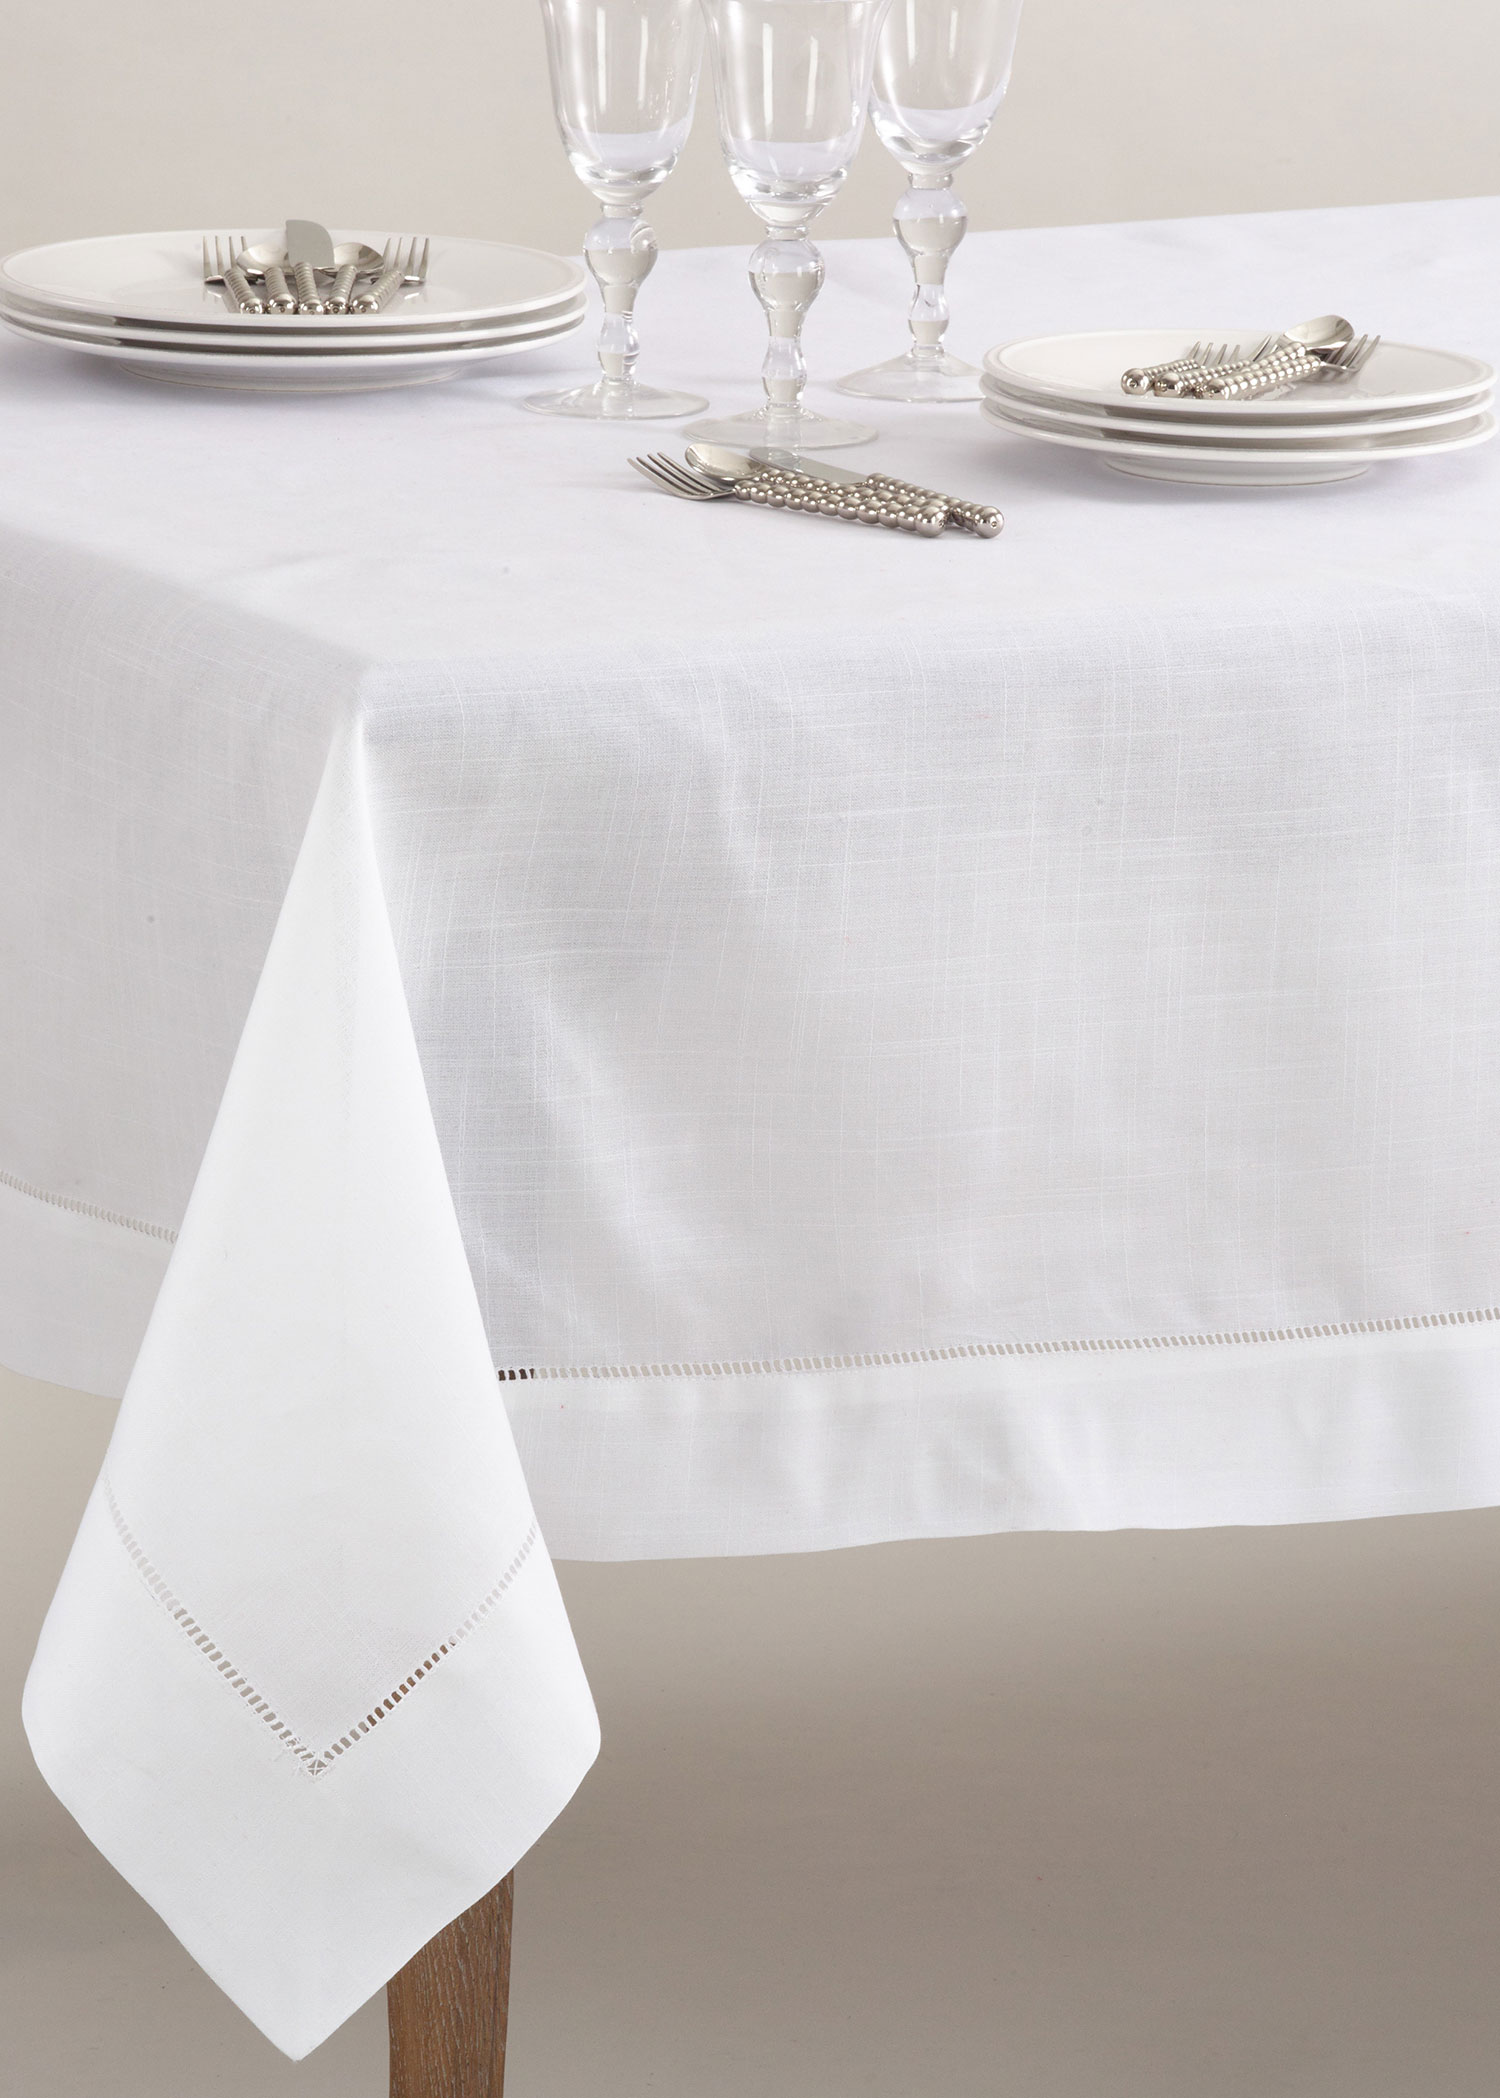 natural-textiles-table-linen